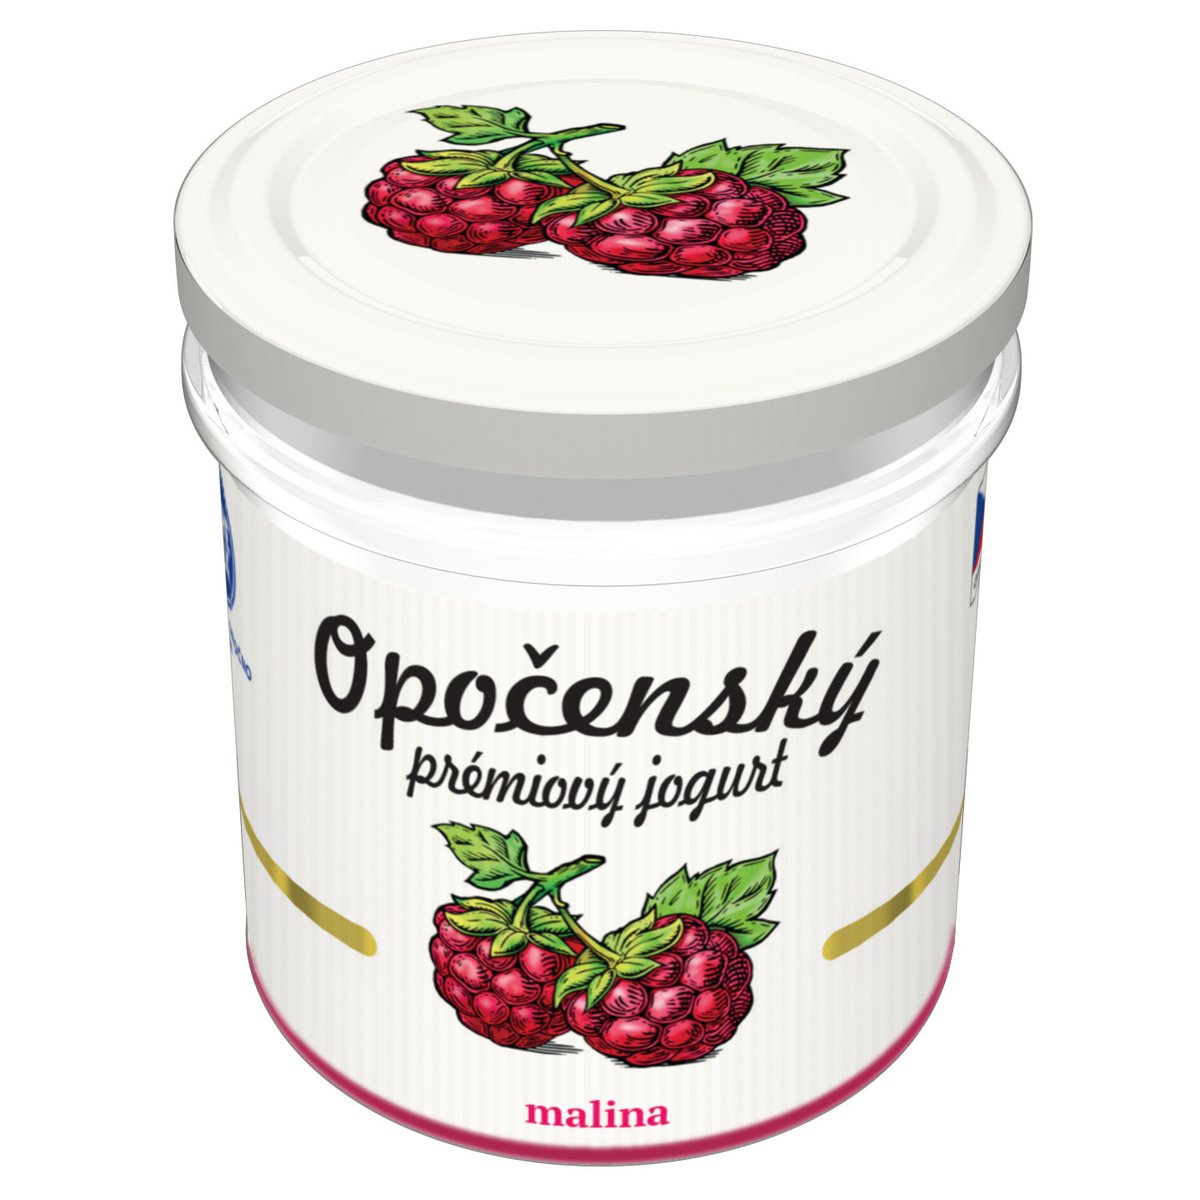 Bohemilk Opočenský prémiový jogurt malina